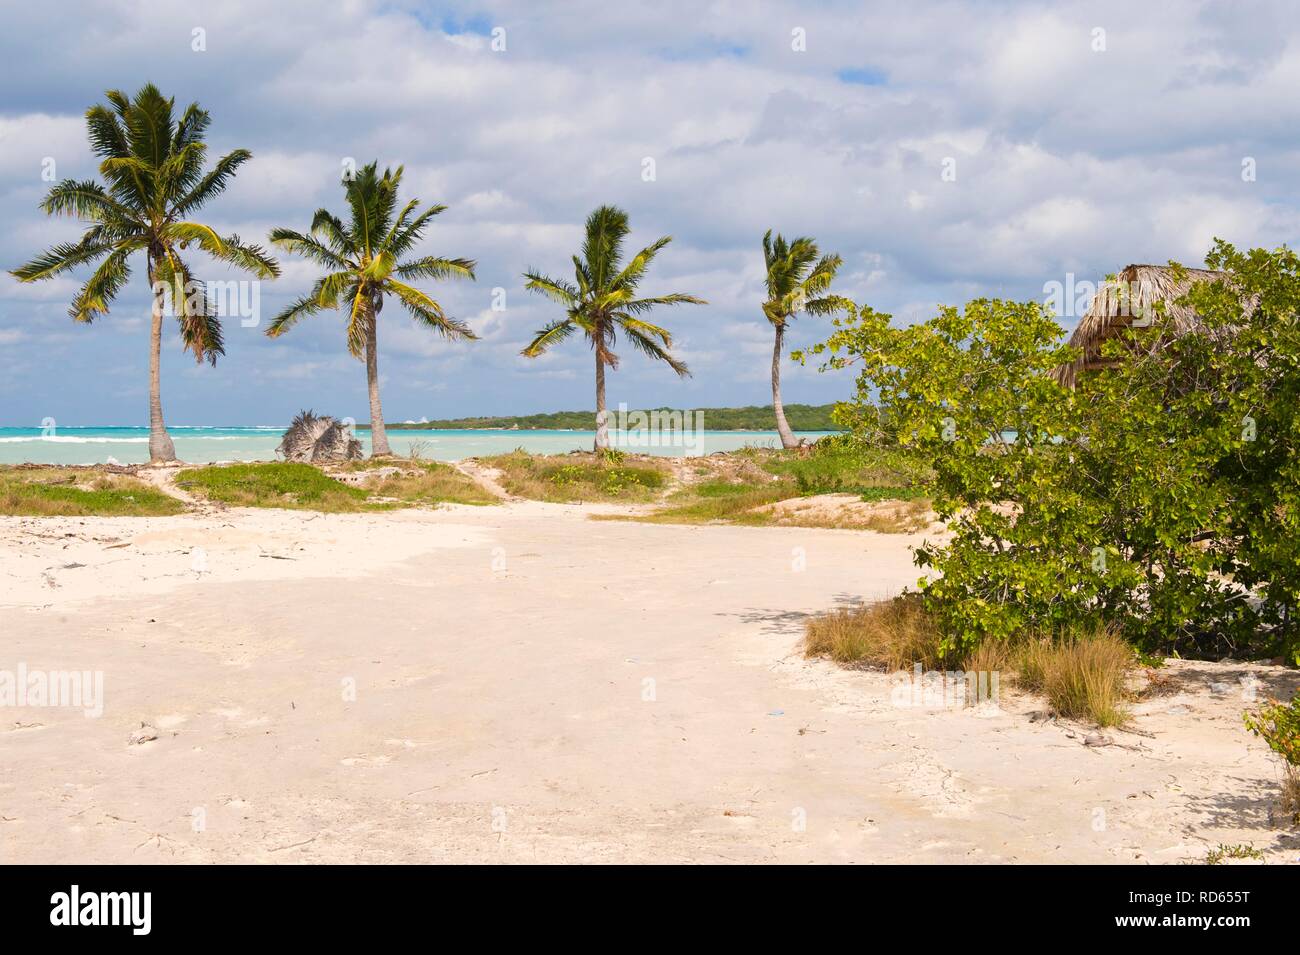 Cayo las Brujas, beach, palm trees, Santa Clara Province, Cuba, Central America Stock Photo